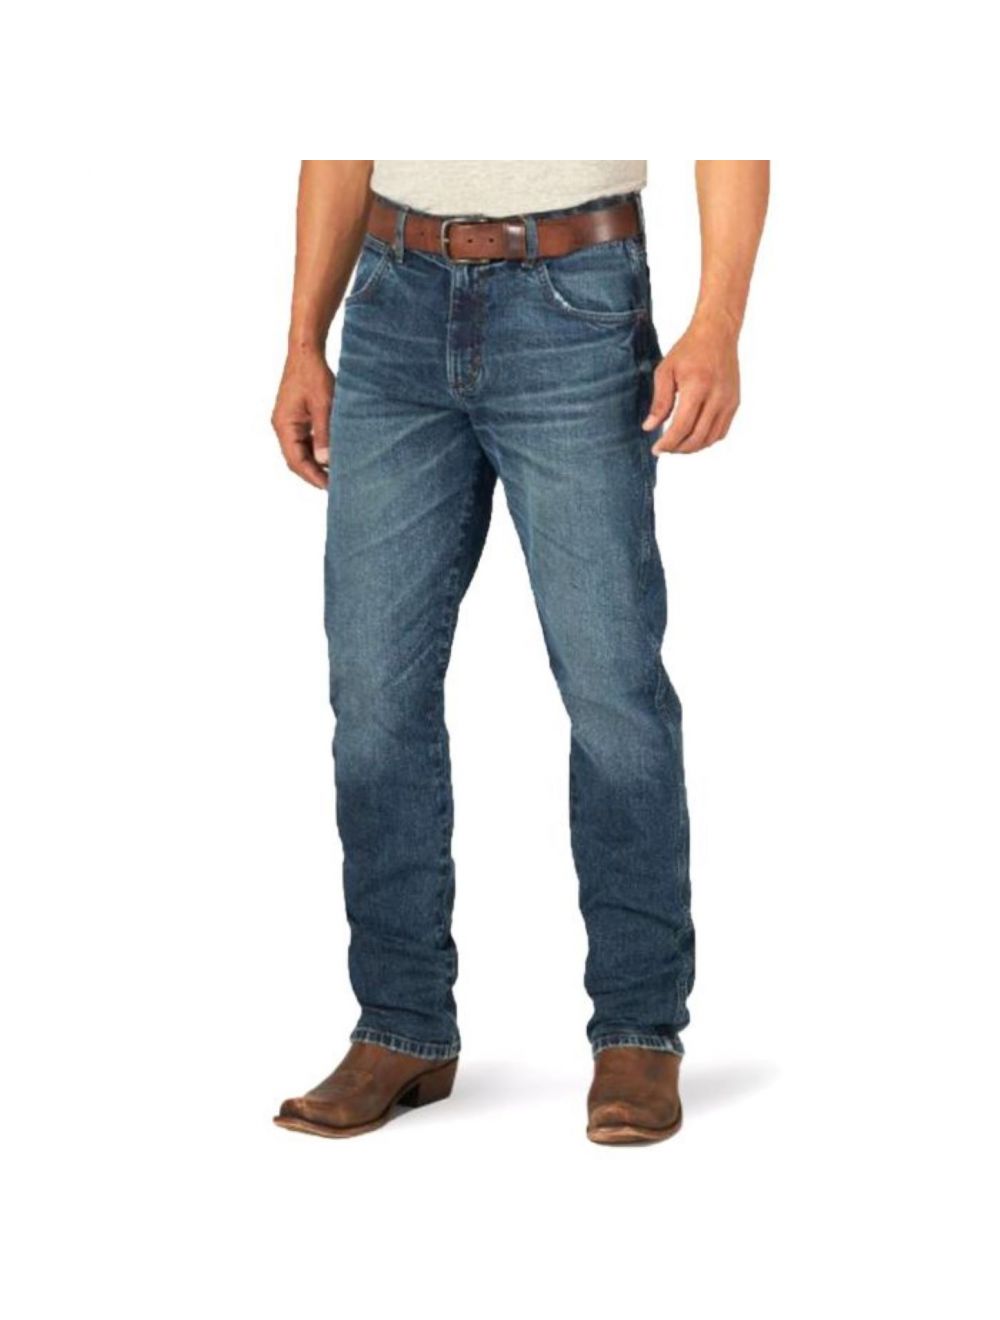 Wrangler Men's Retro Premium Green Jeans Slim Straight